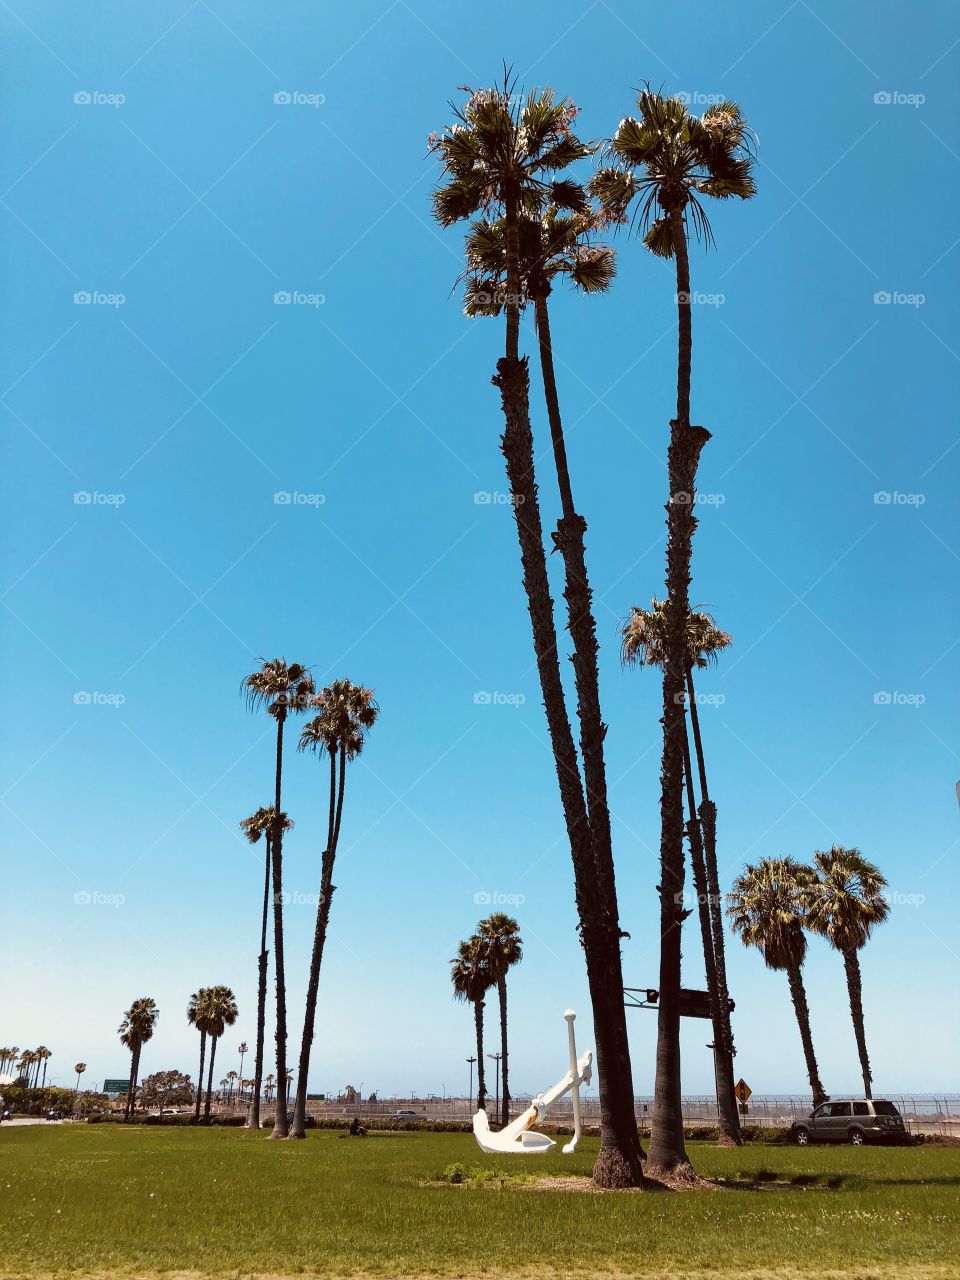 Palm trees + California sunshine 